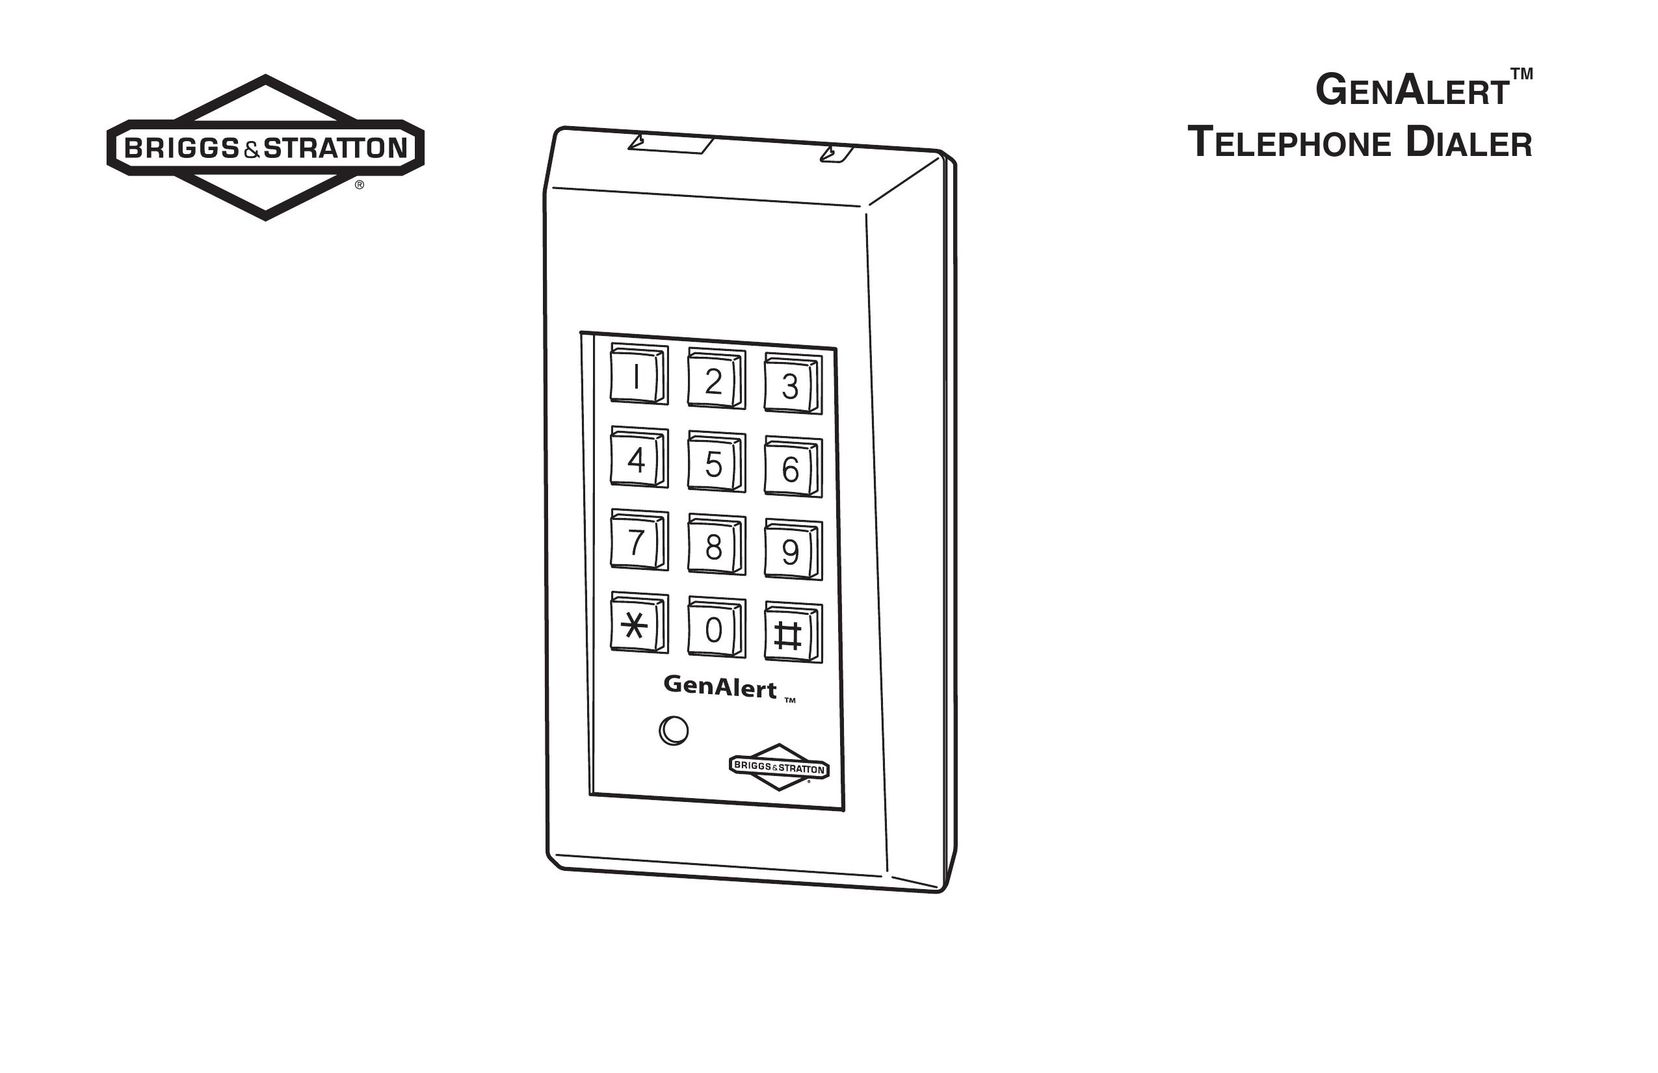 Briggs & Stratton Model 040205-0 Telephone User Manual